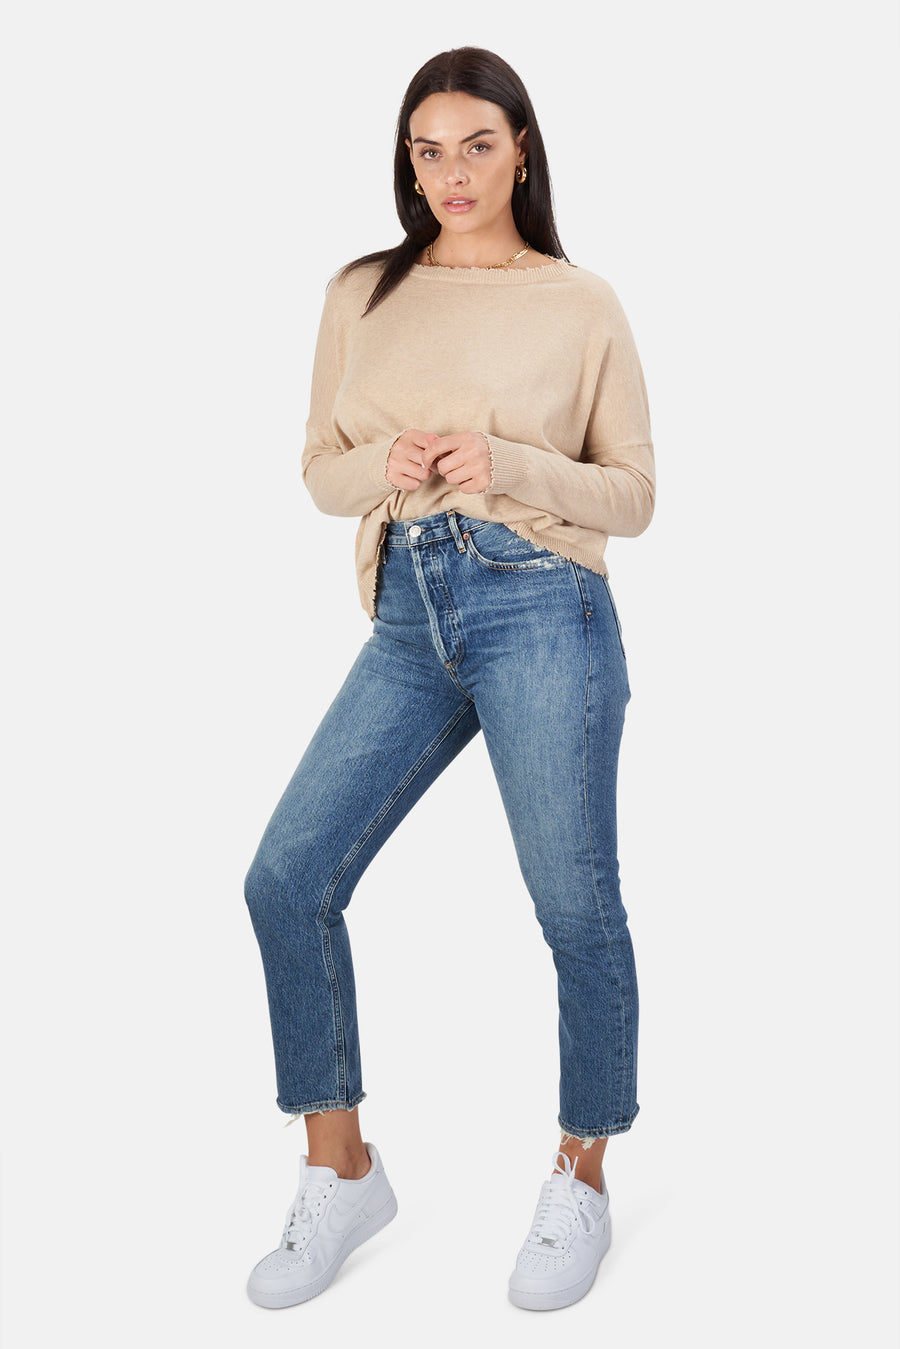 Minnie Rose Linen Cotton/Cashmere Crop Sweater - blueandcream